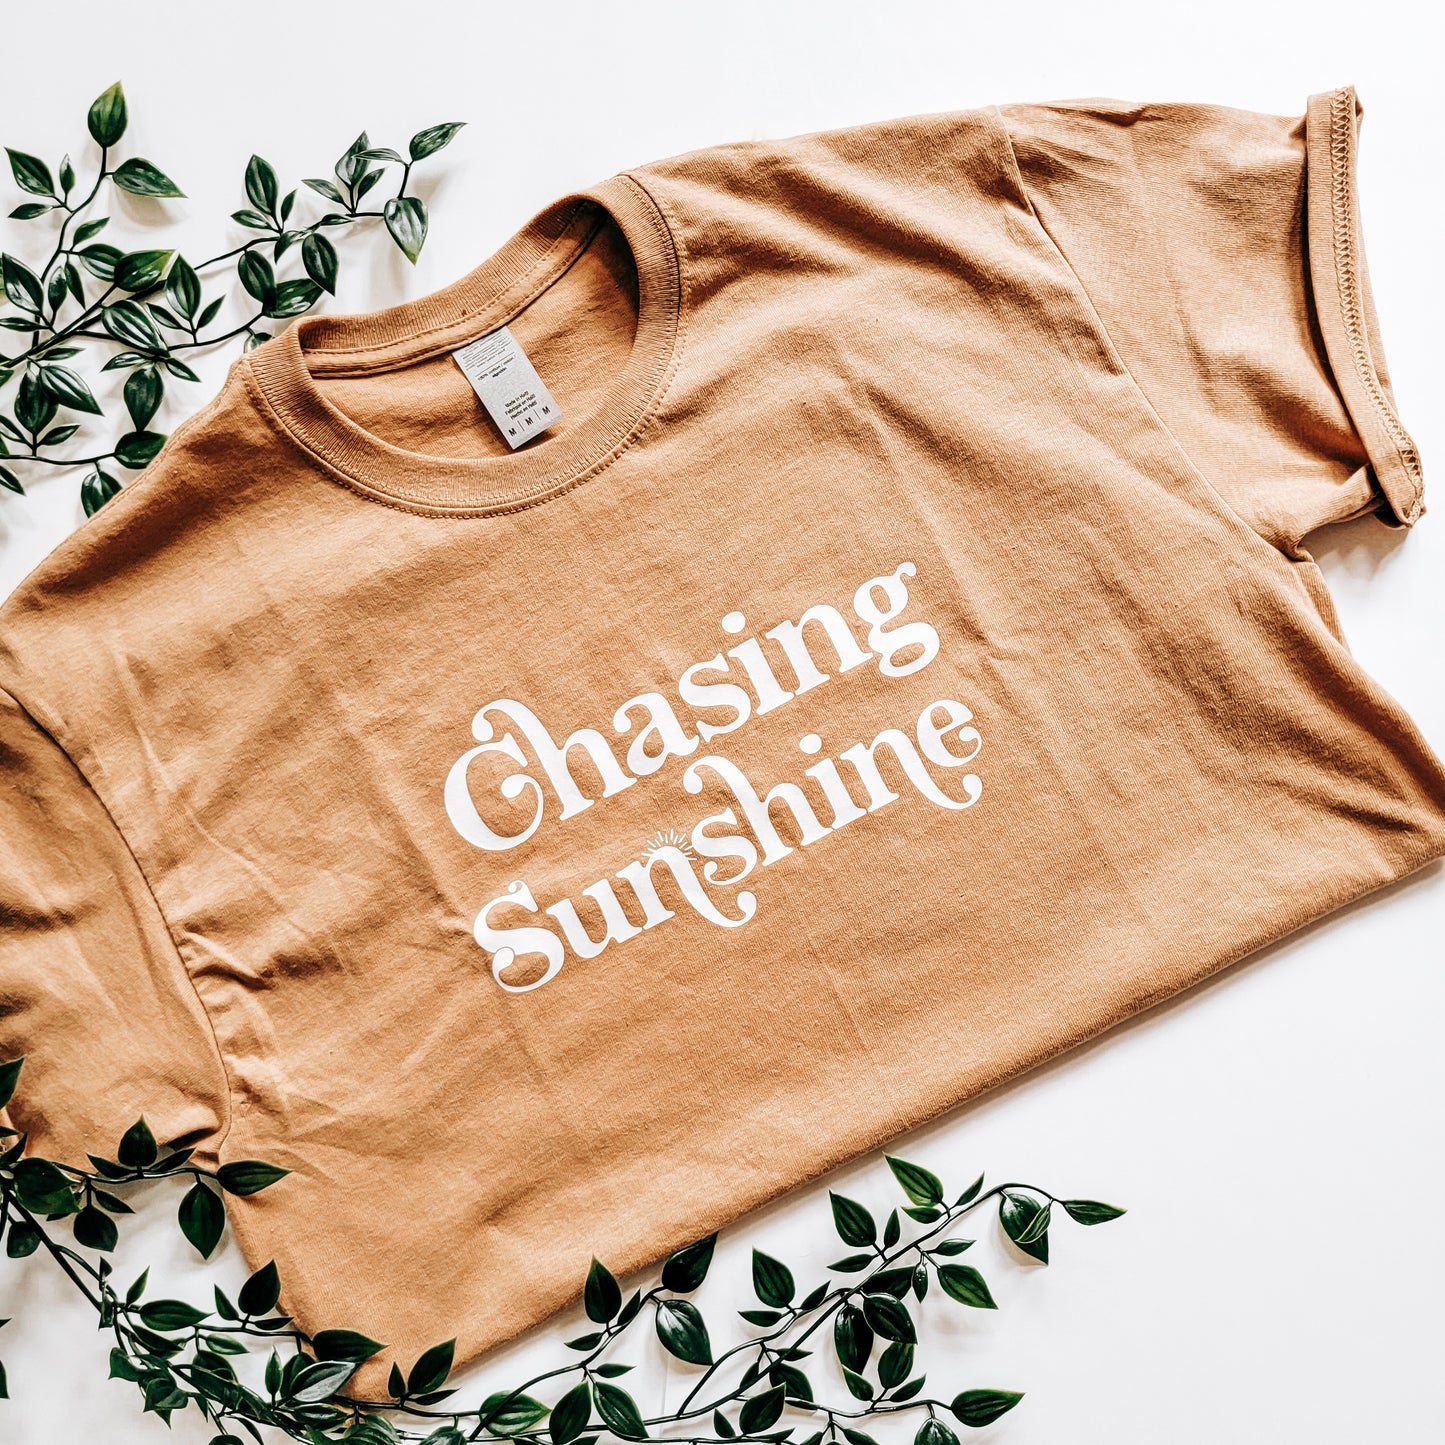 Chasing Sunshine T-shirt